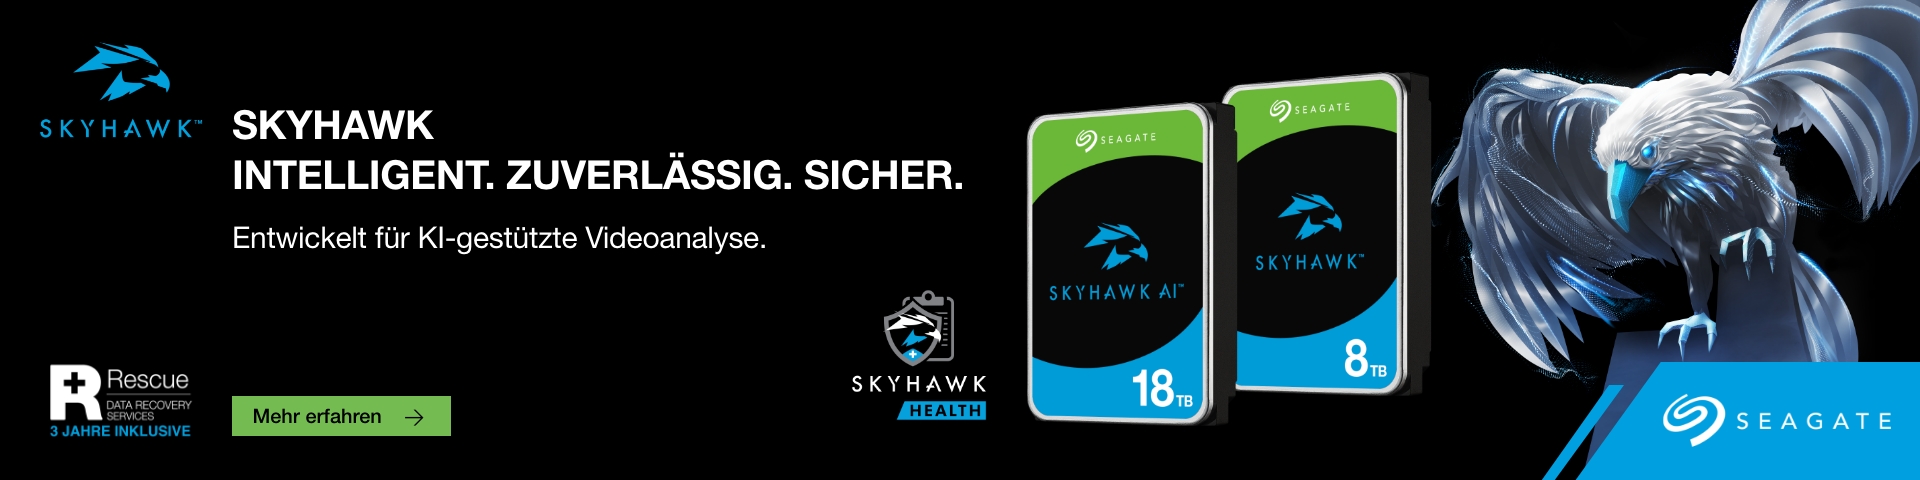 Skyhawk_Slider_1290x480